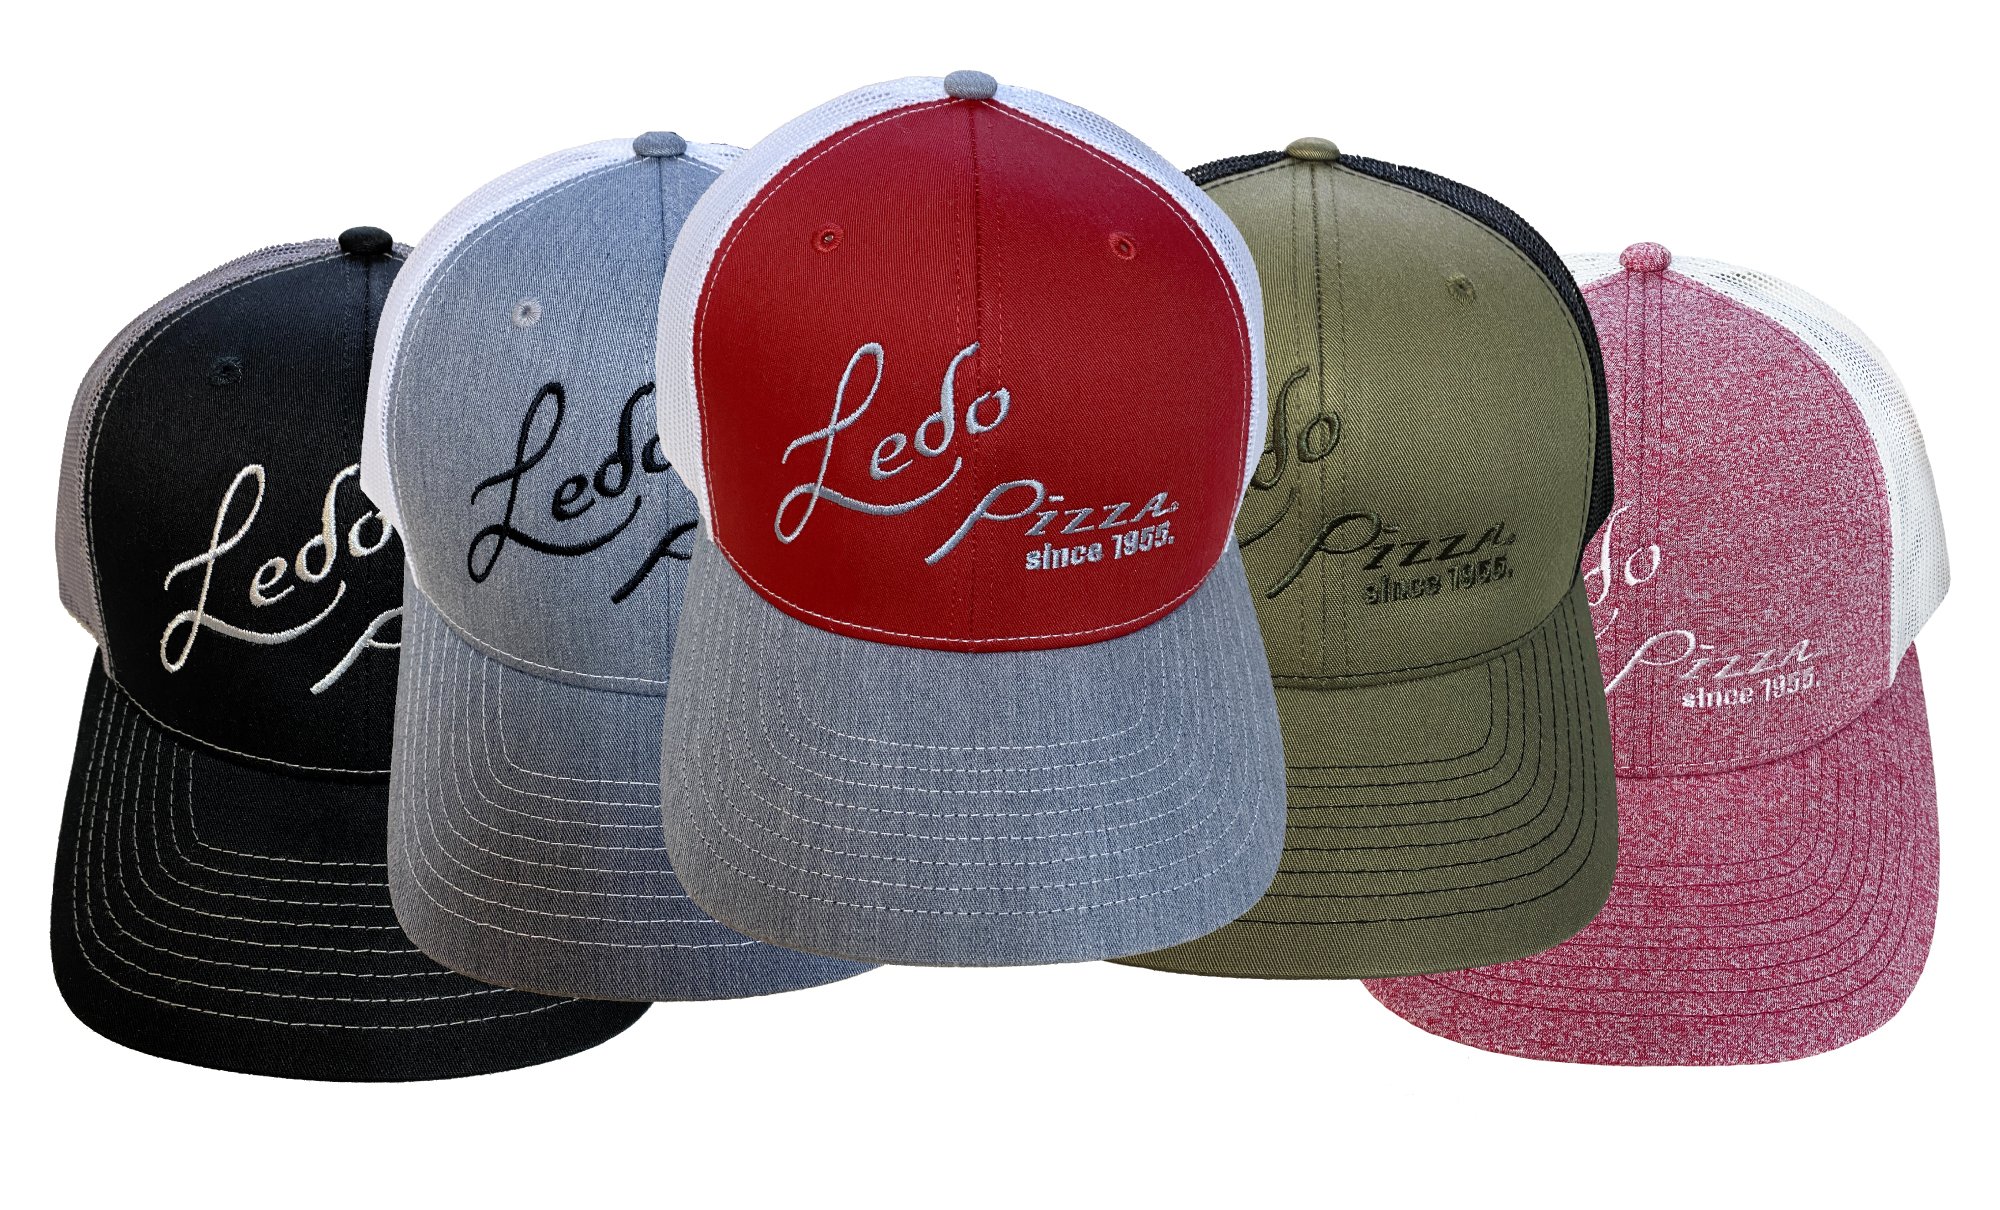 Ledo Emoji Leather Patch Trucker Hat - Ledo Pizza